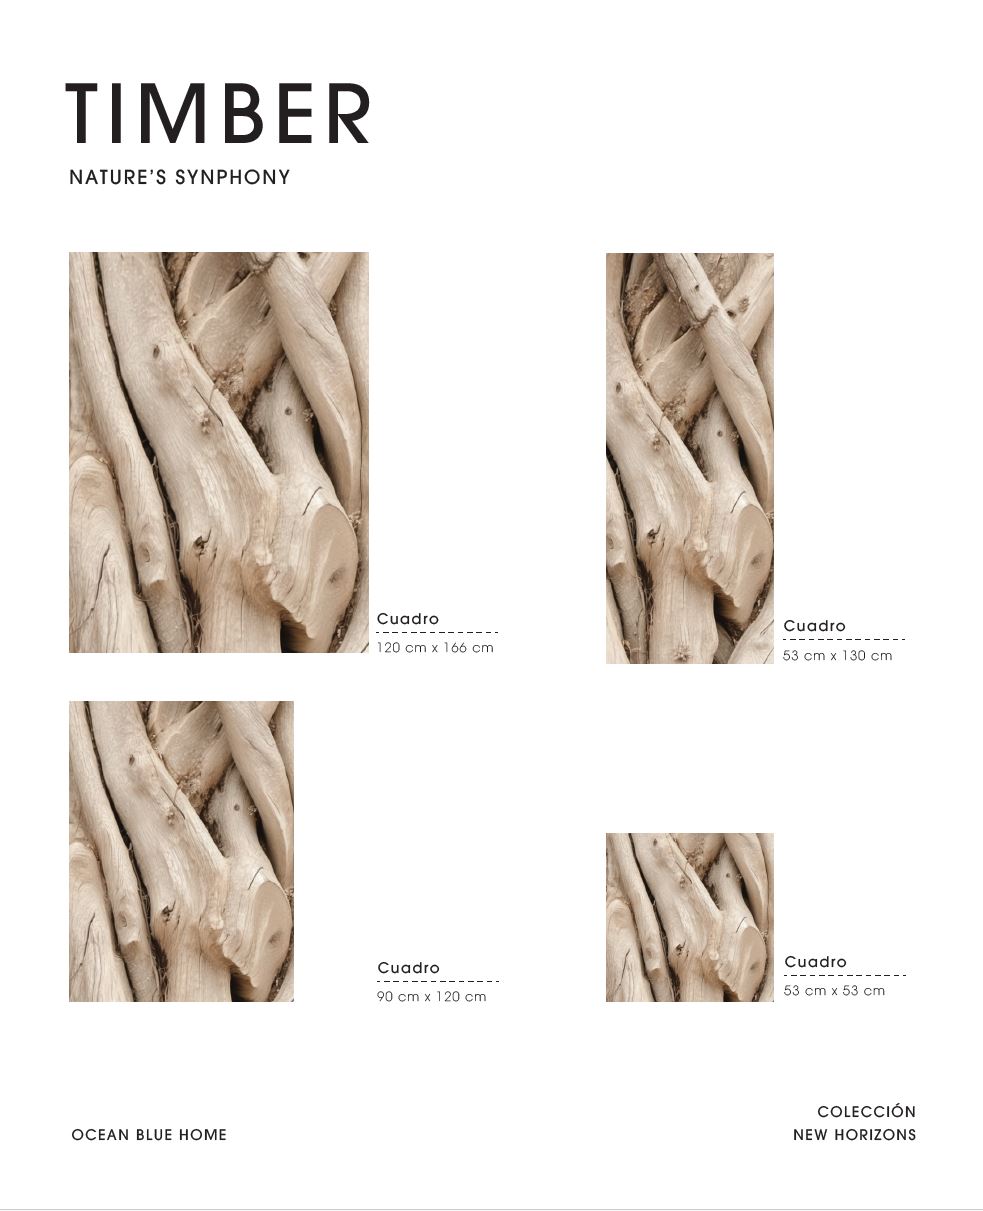 Cuadro Timber